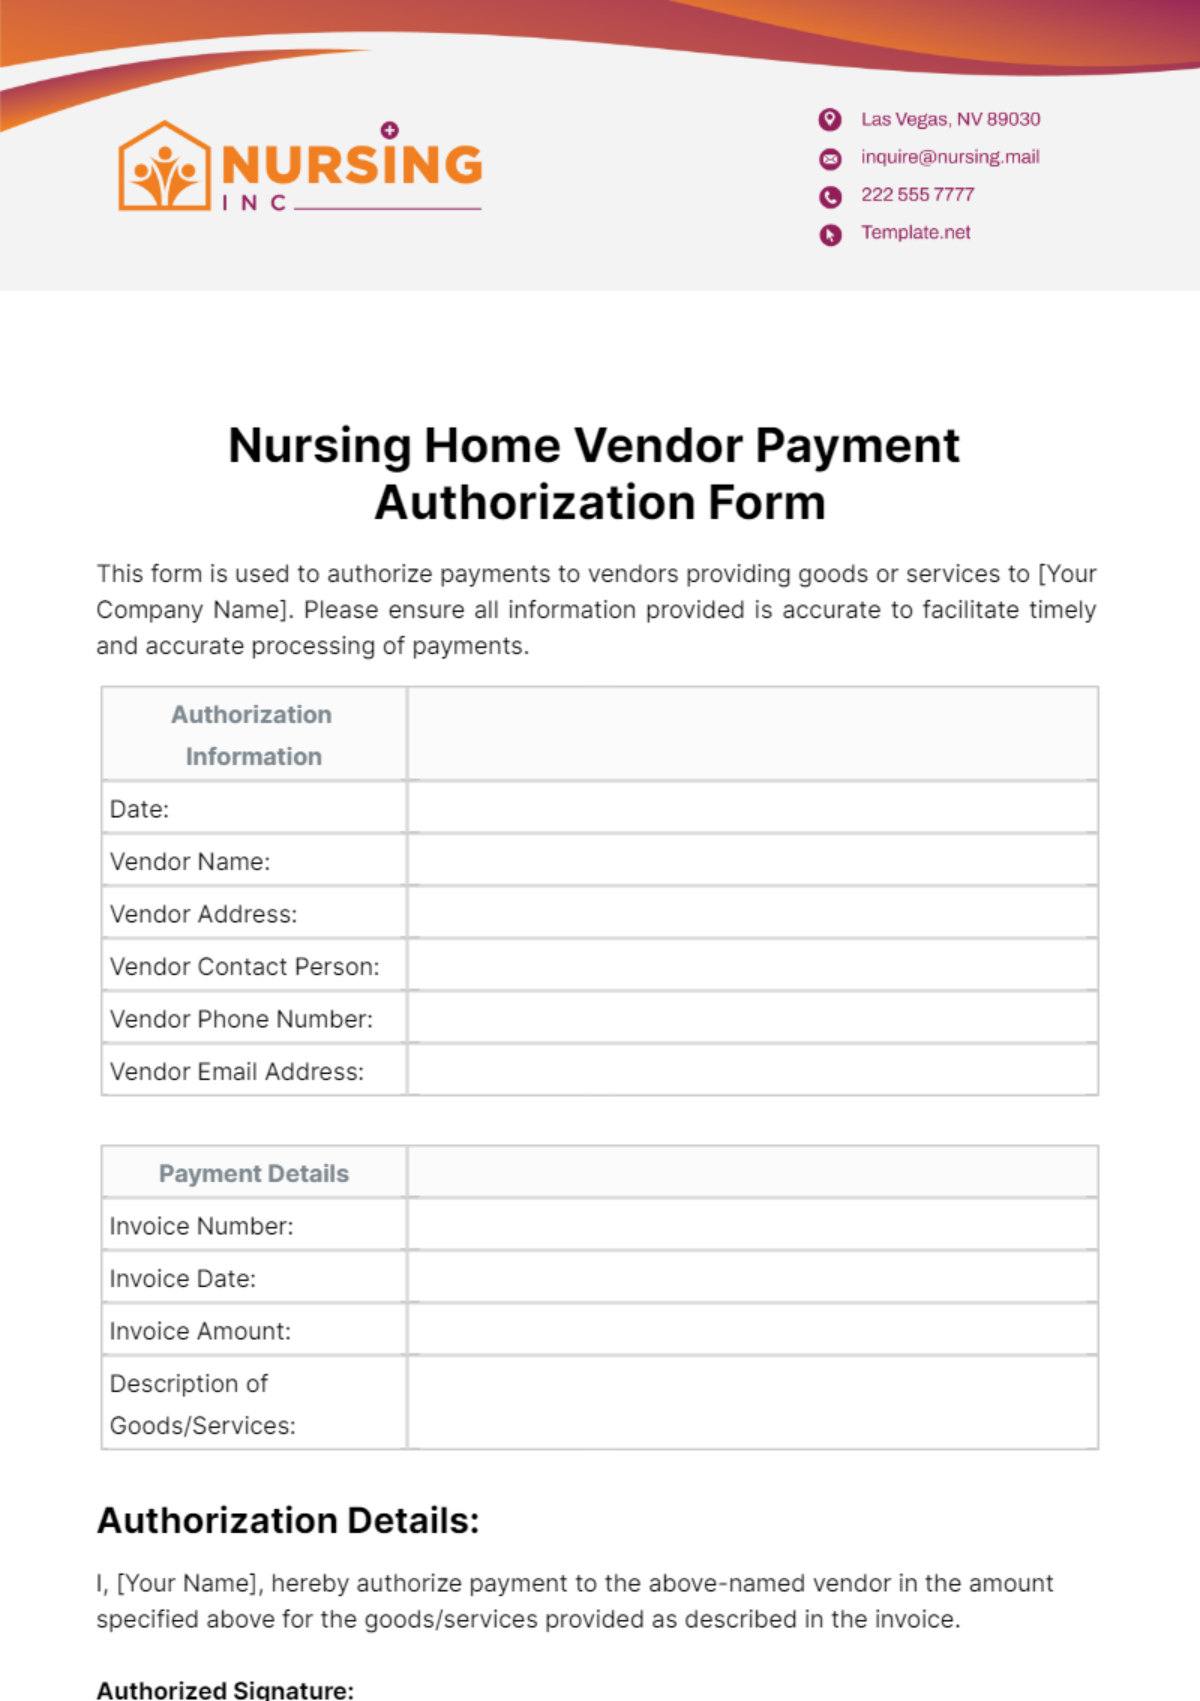 Nursing Home Vendor Payment Authorization Form Template